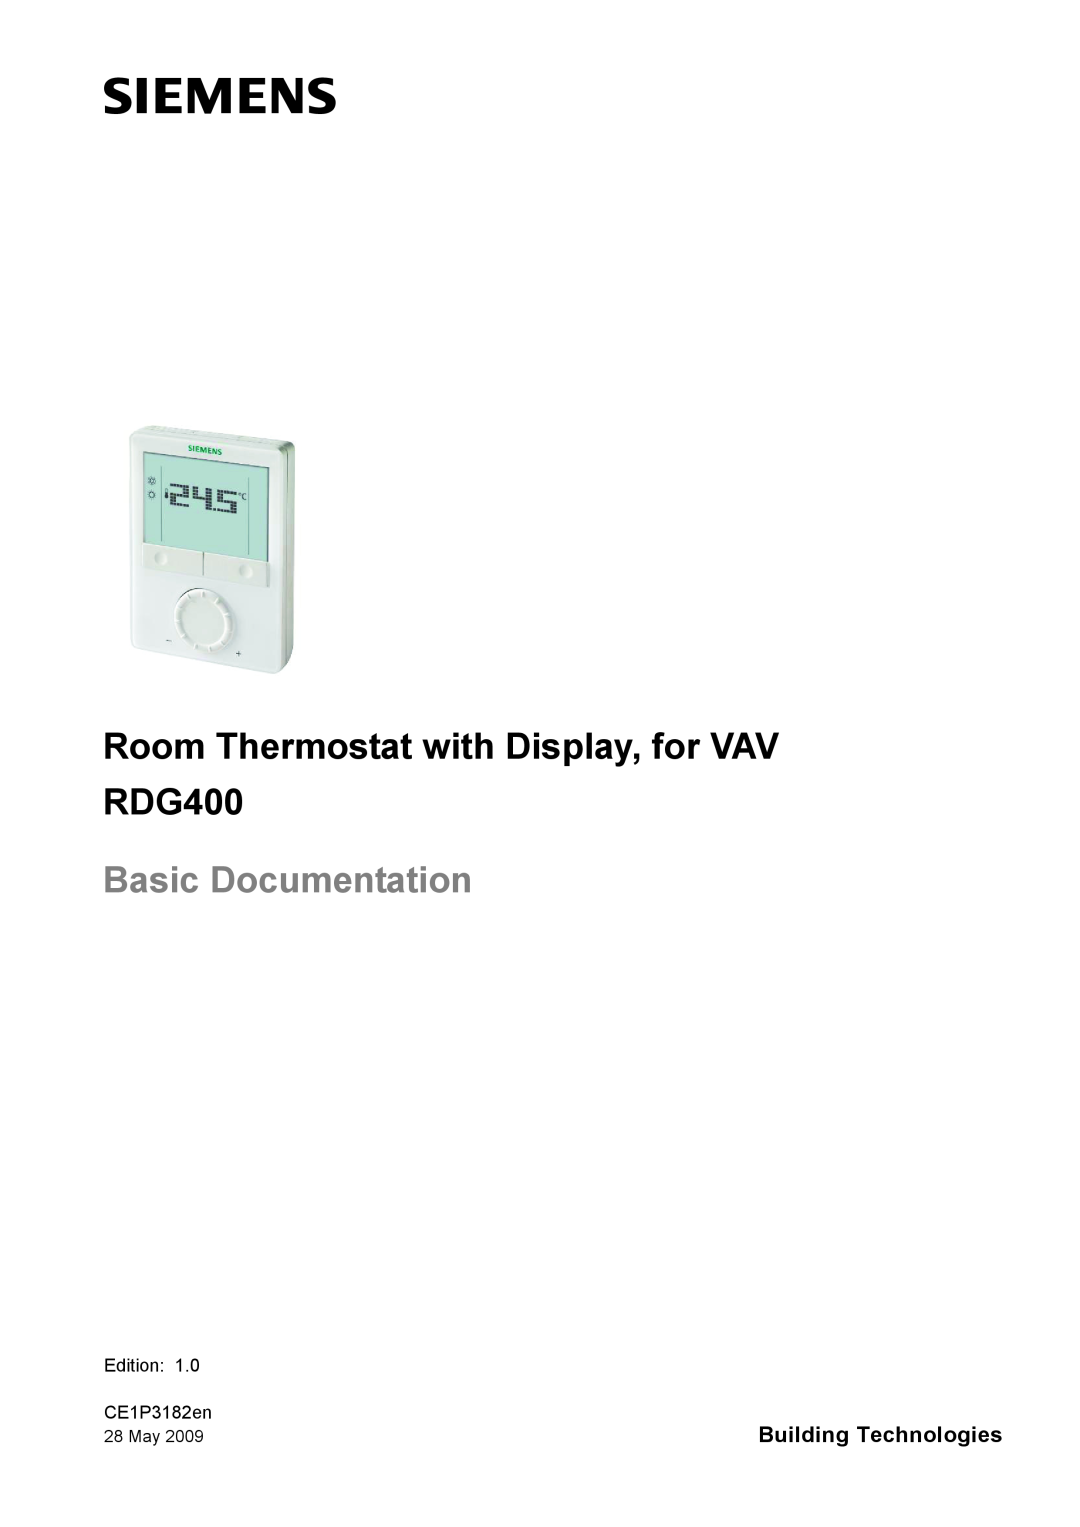 Siemens manual Building Technologies, Room Thermostat with Display, for VAV RDG400, Basic Documentation 